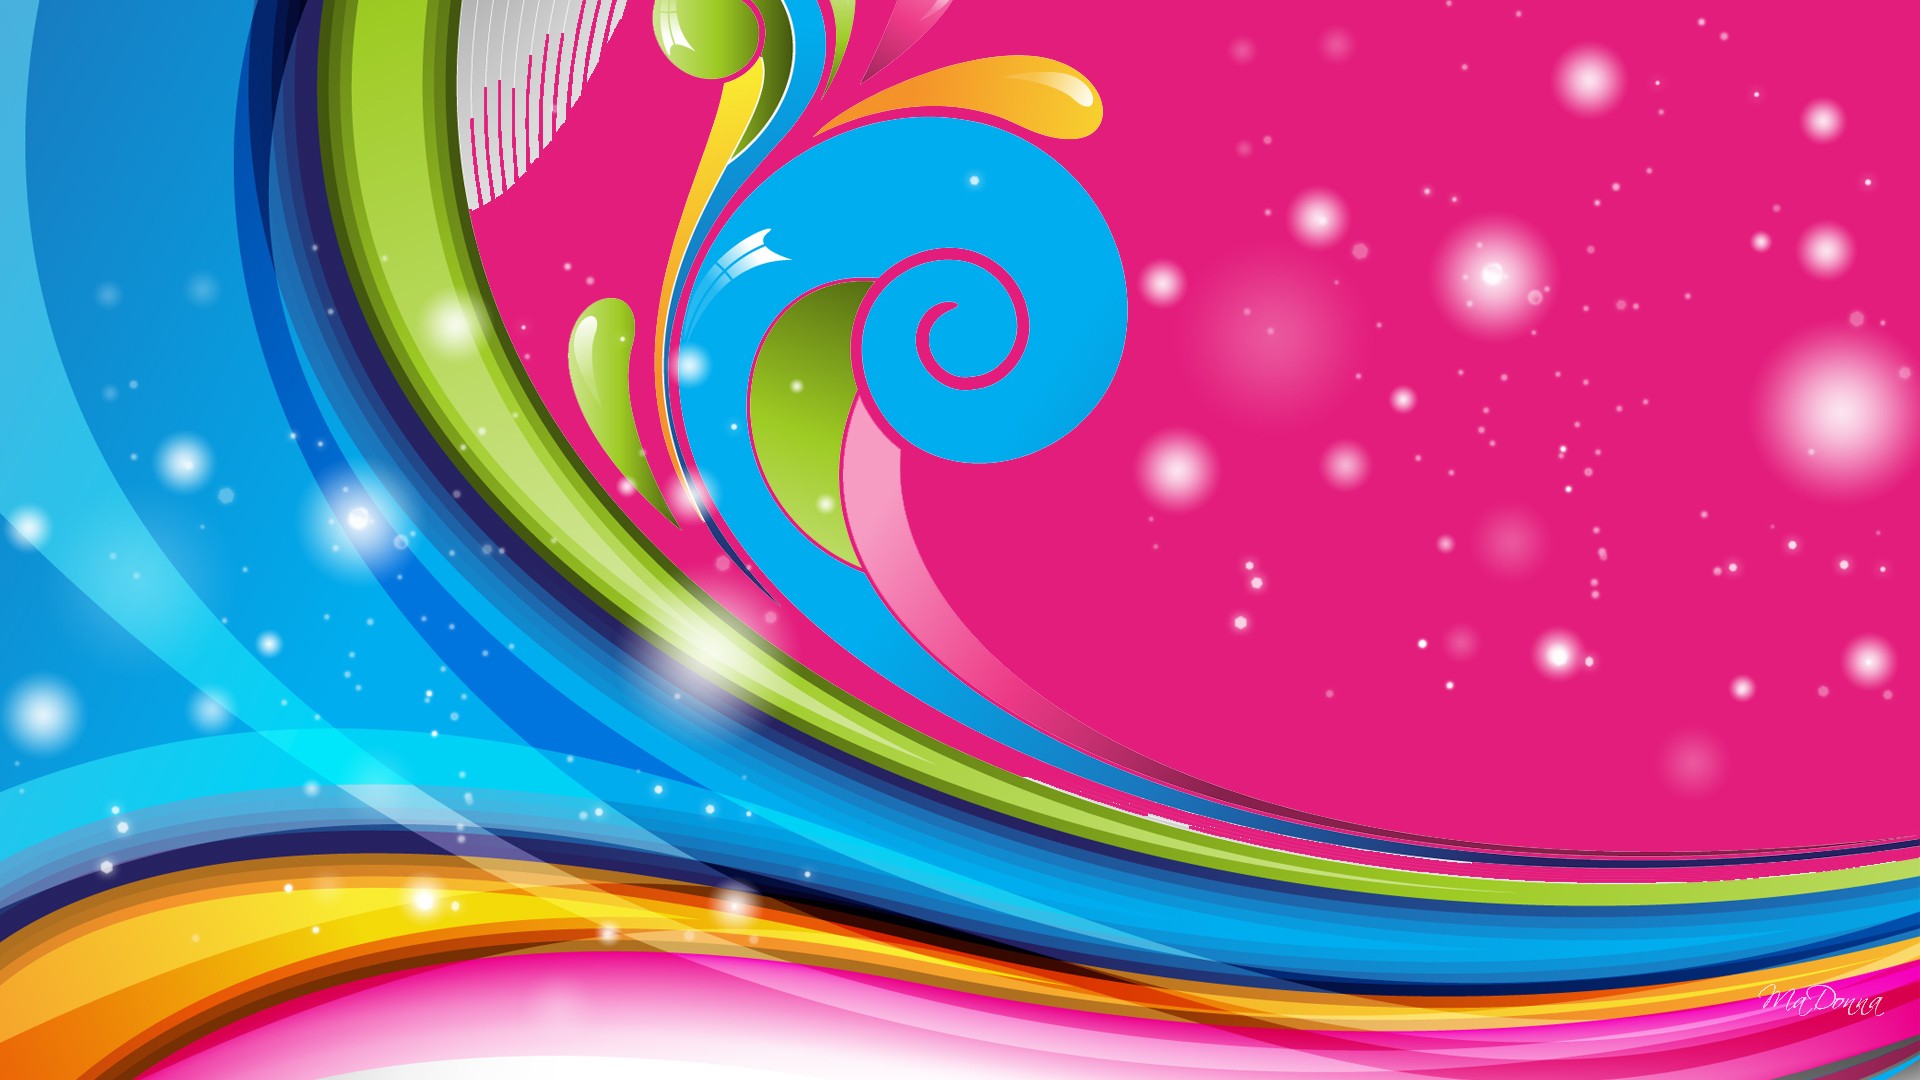 Rainbow Color Swirl wallpaper   ForWallpapercom